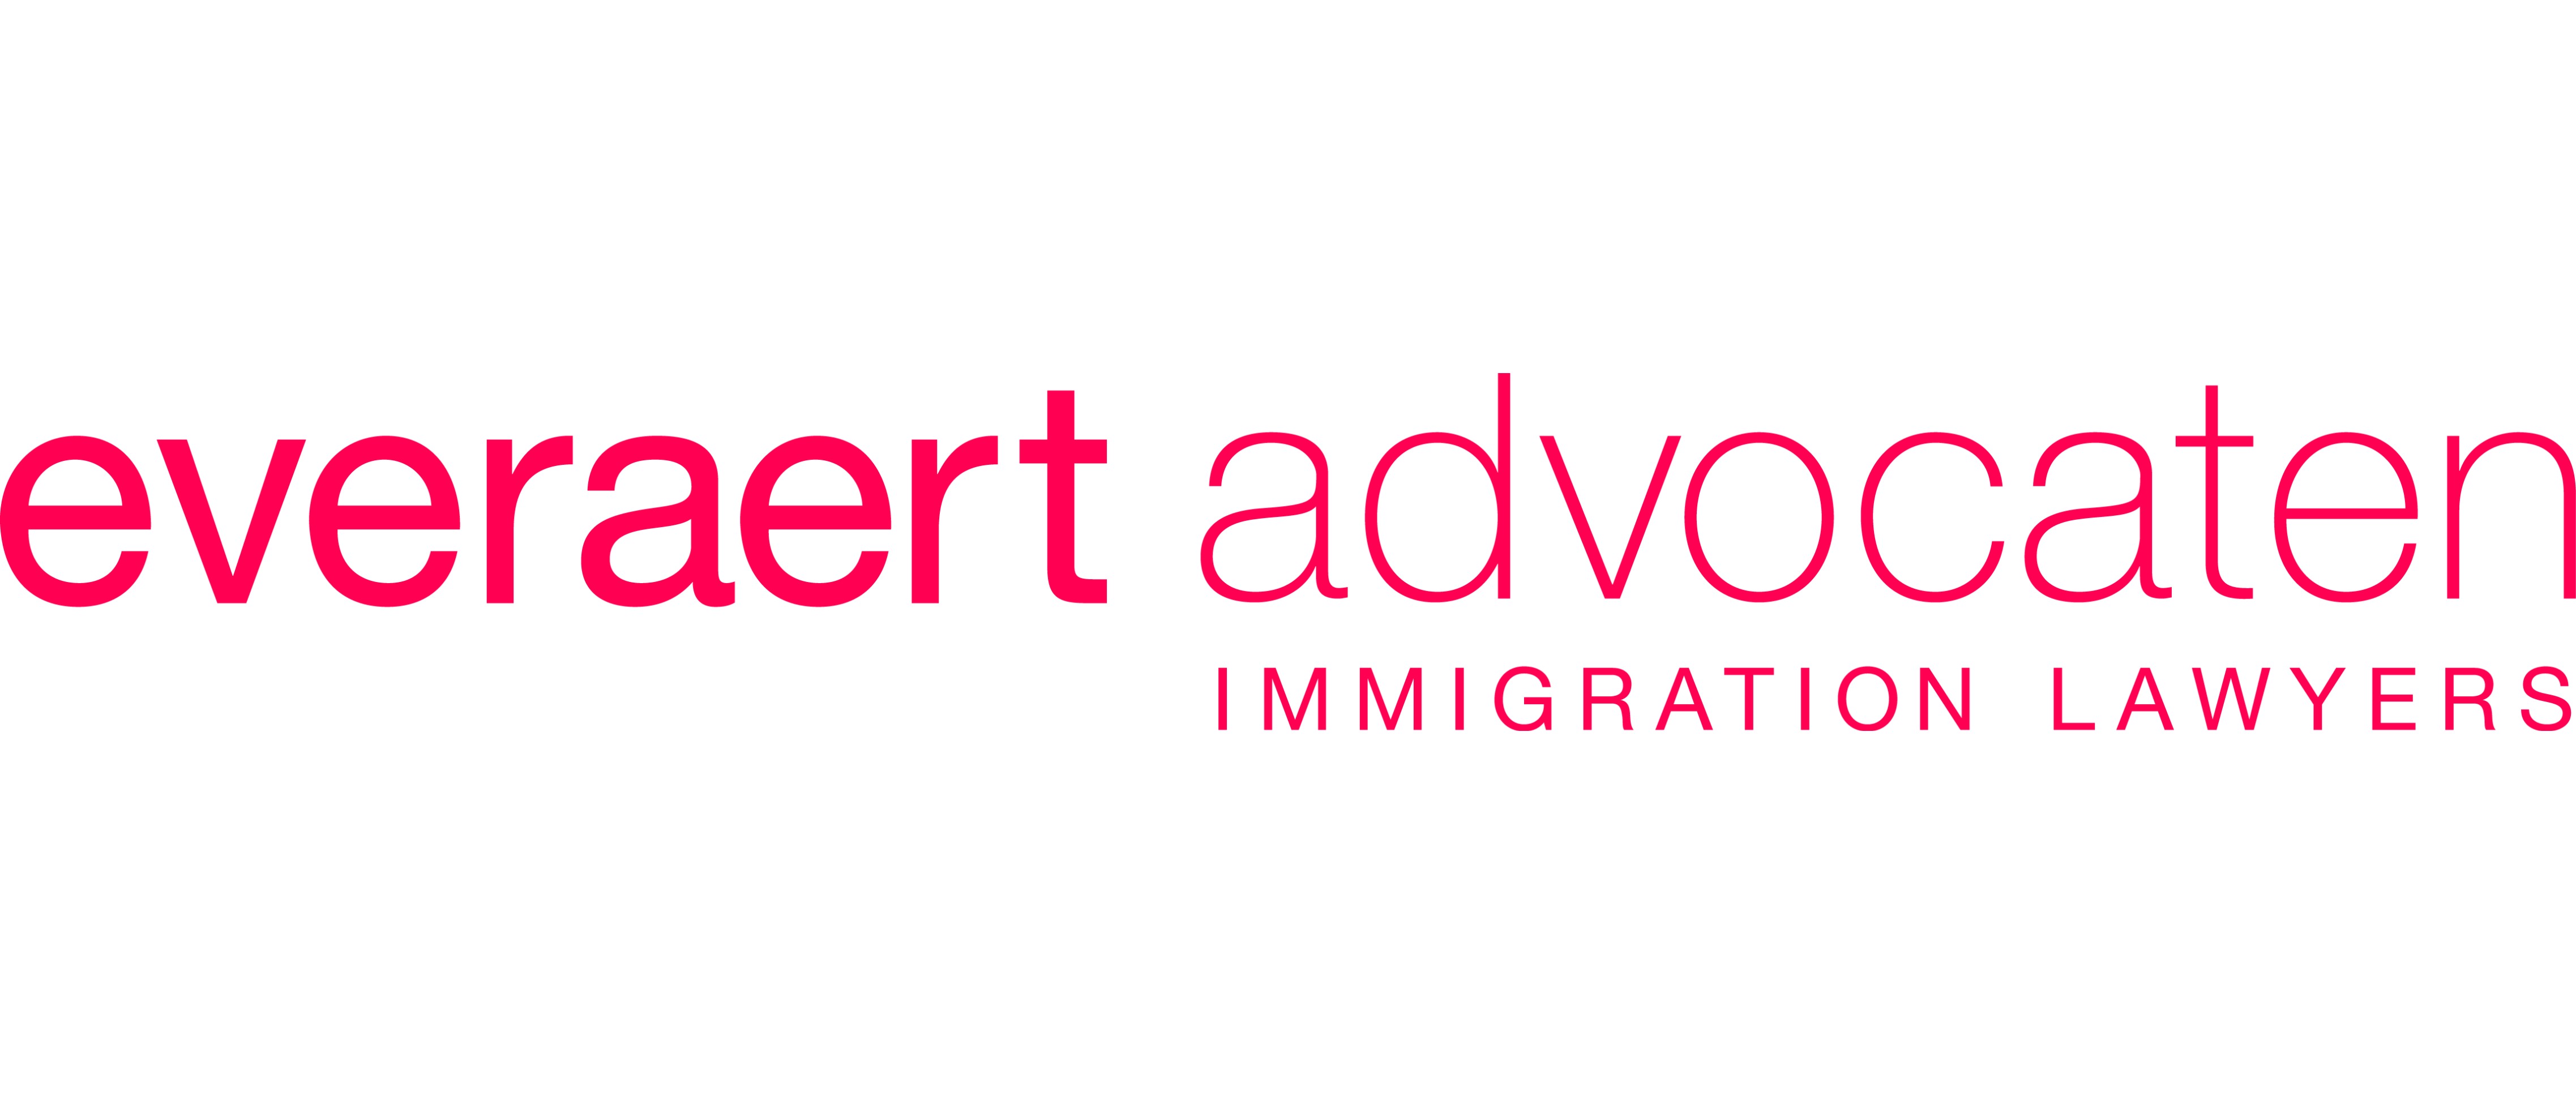 Everaert Advocaten Immigration Lawyers 